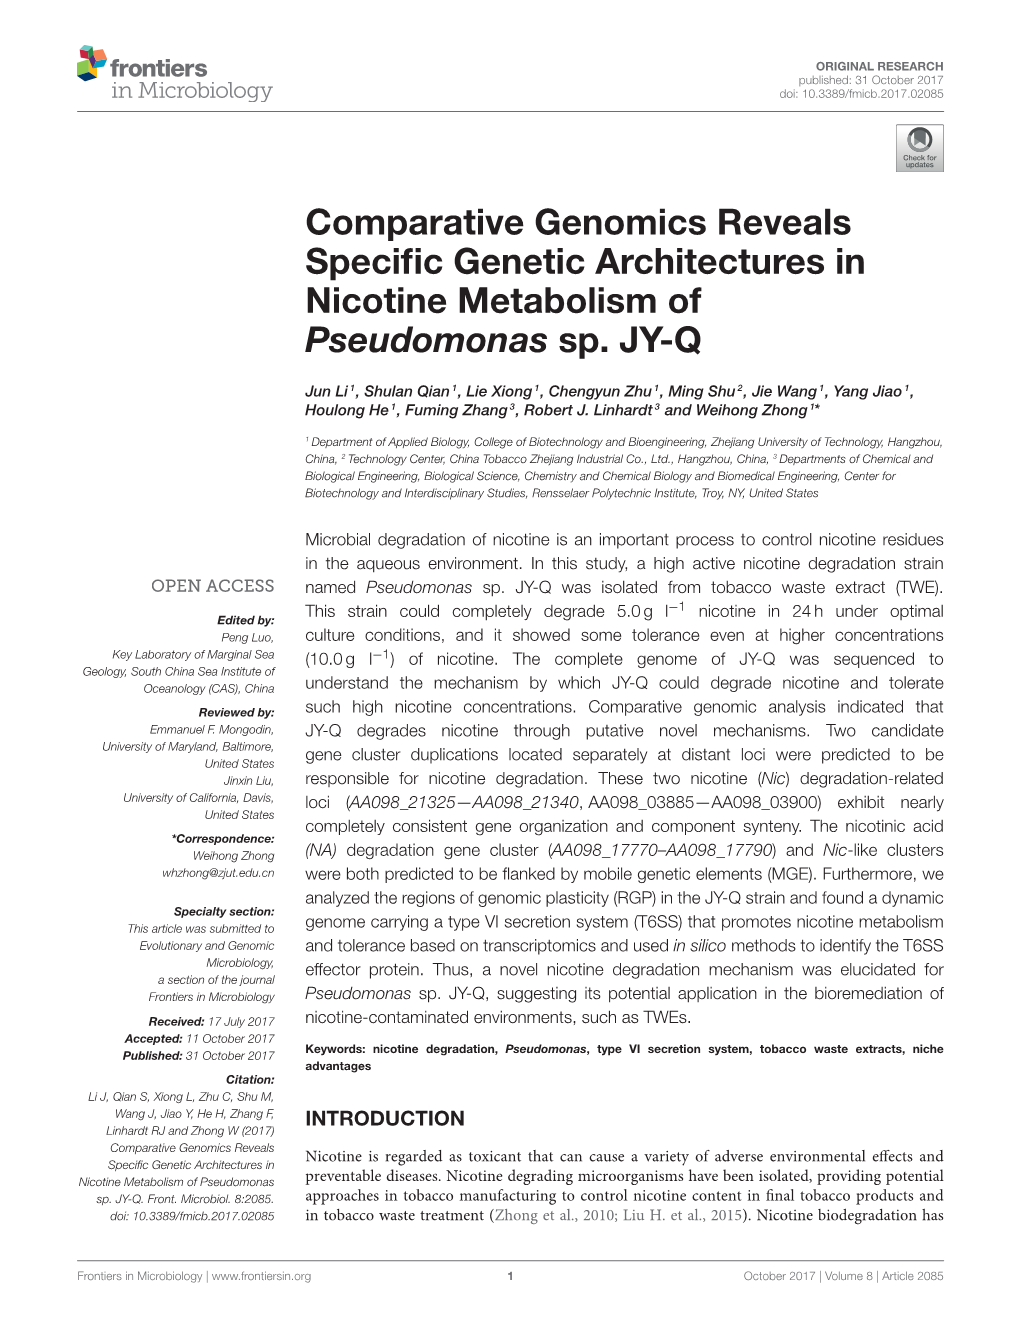 Comparative Genomics Reveals Specific Genetic Architectures In